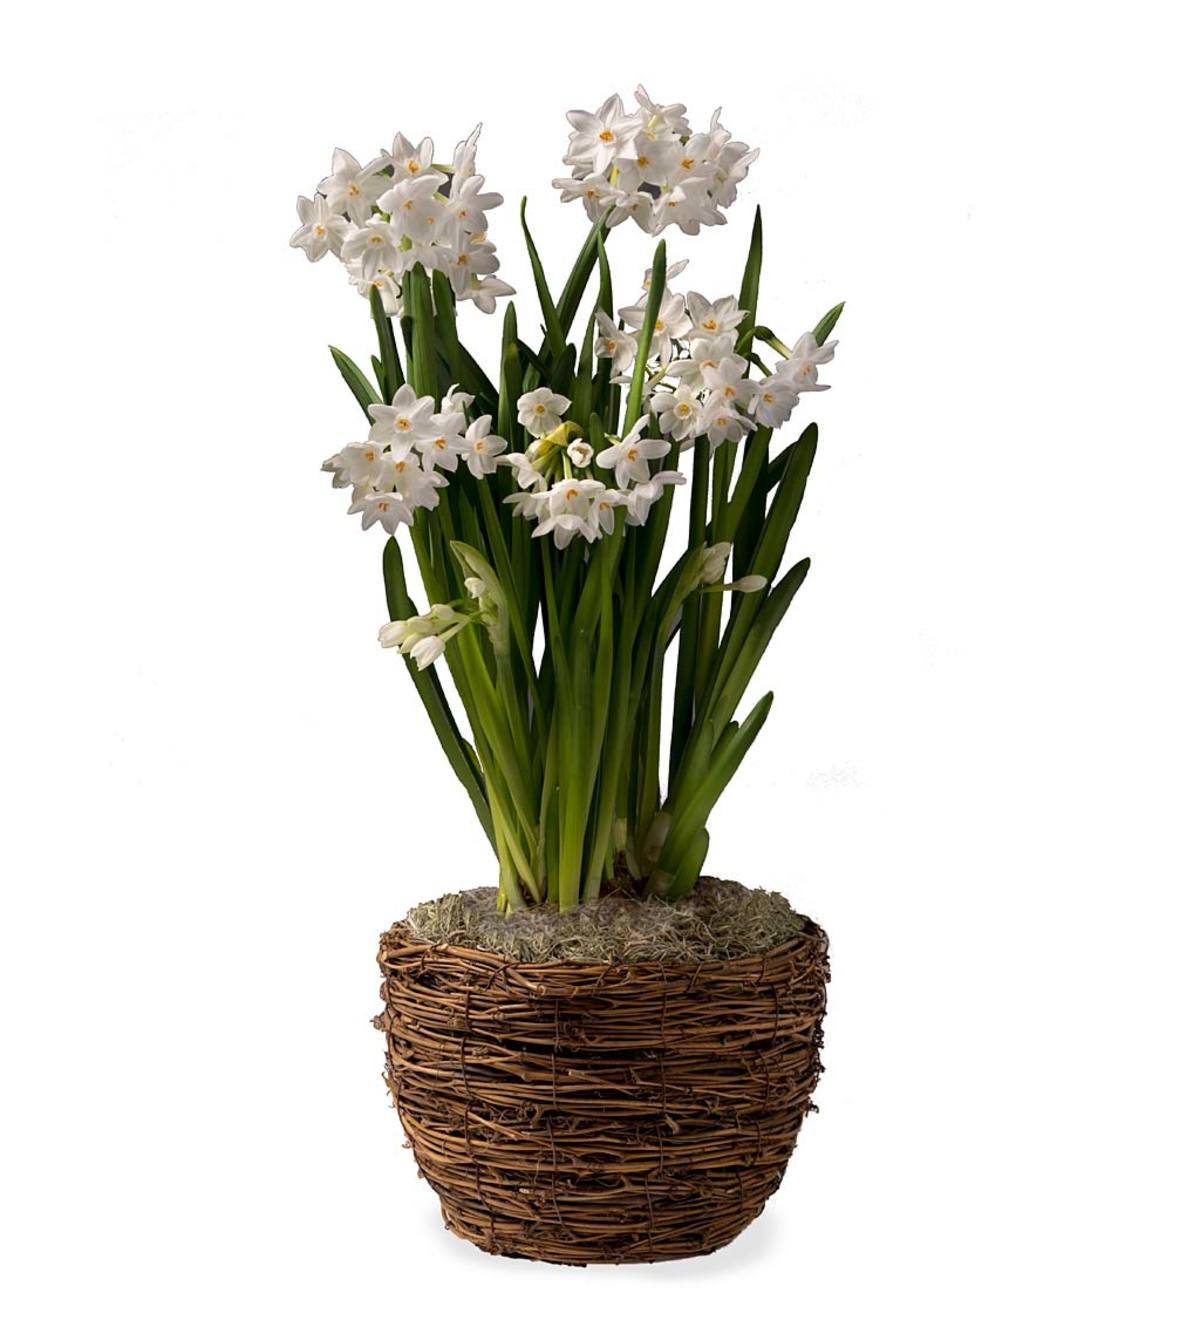 Paperwhite Narcissus Bulb Garden Gift